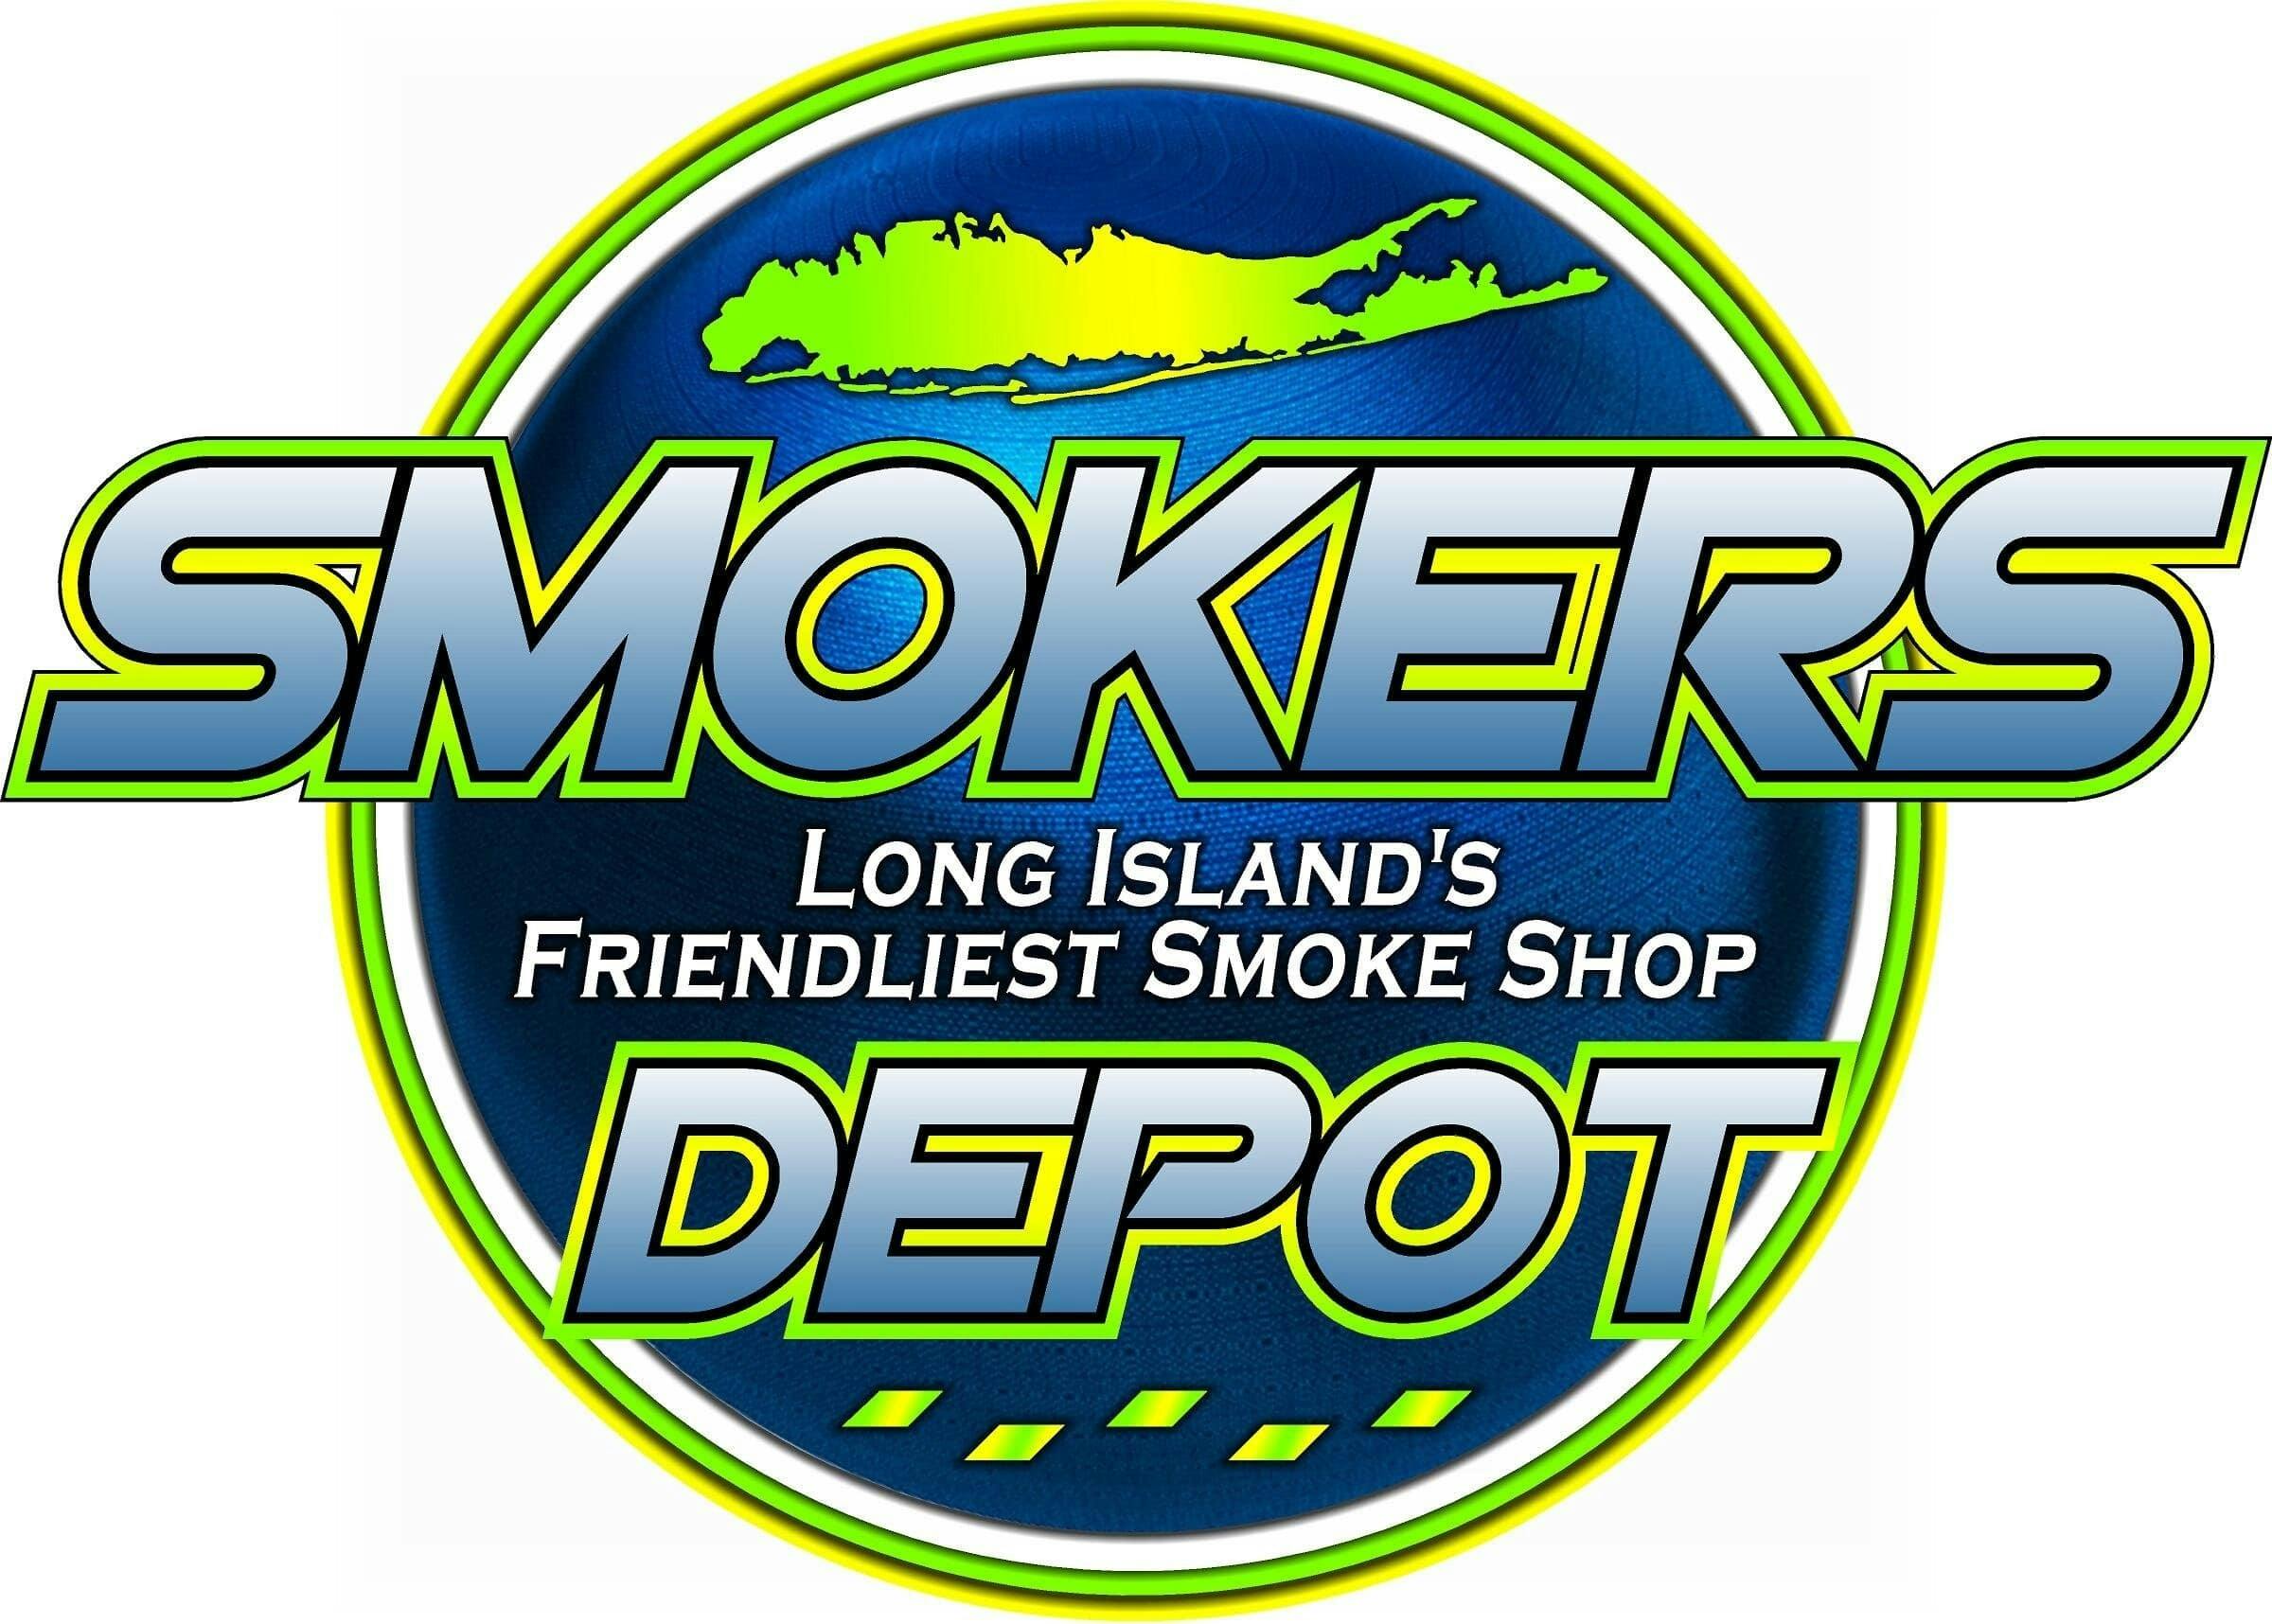 The Smokers Depot & Dispensary logo